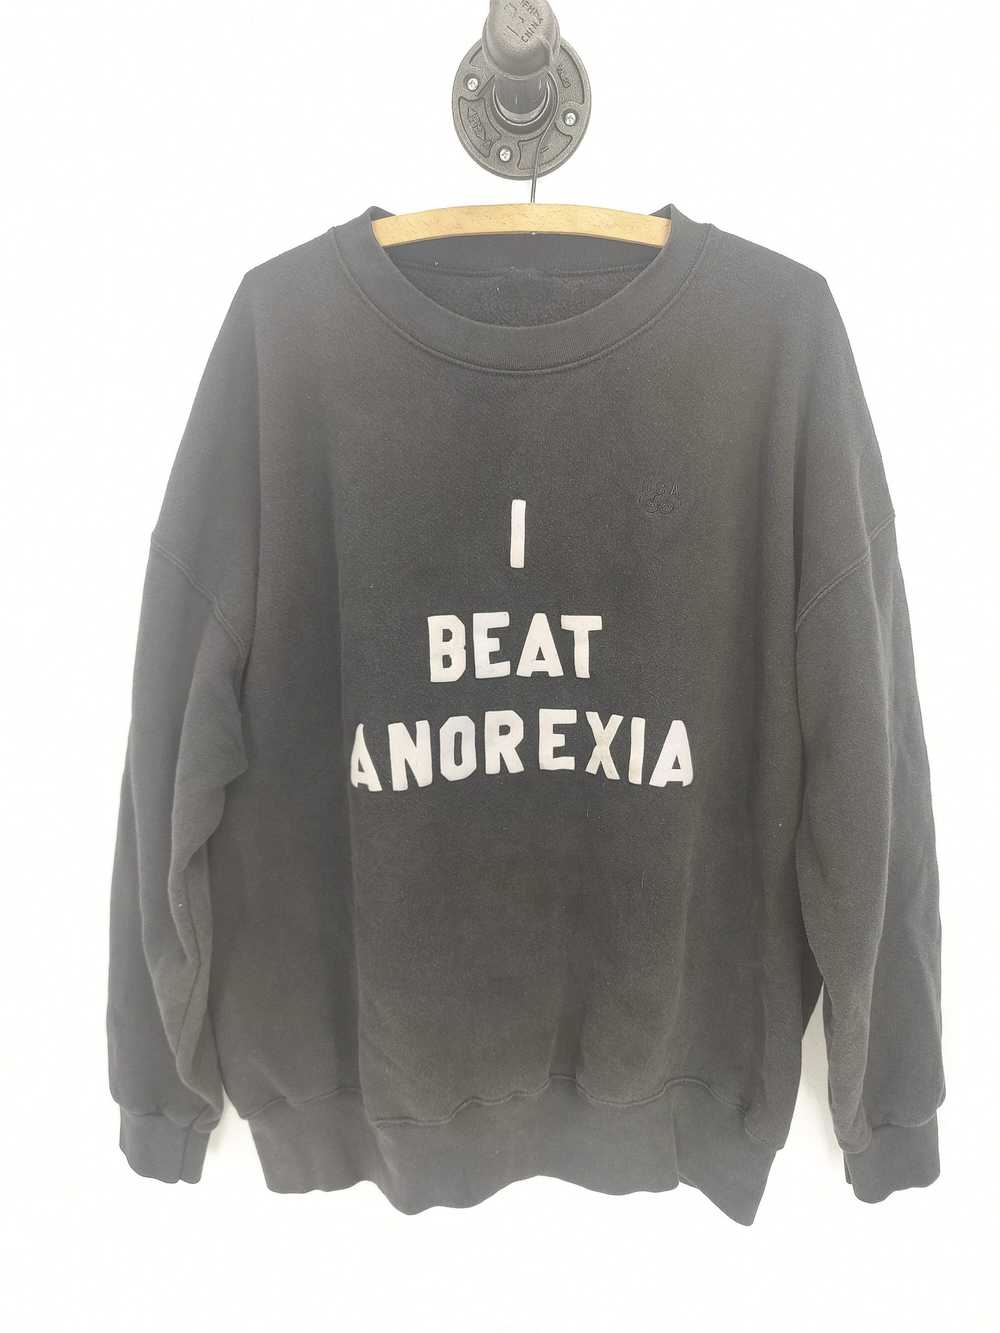 1990s “I Beat Anorexia” Crewneck - image 1